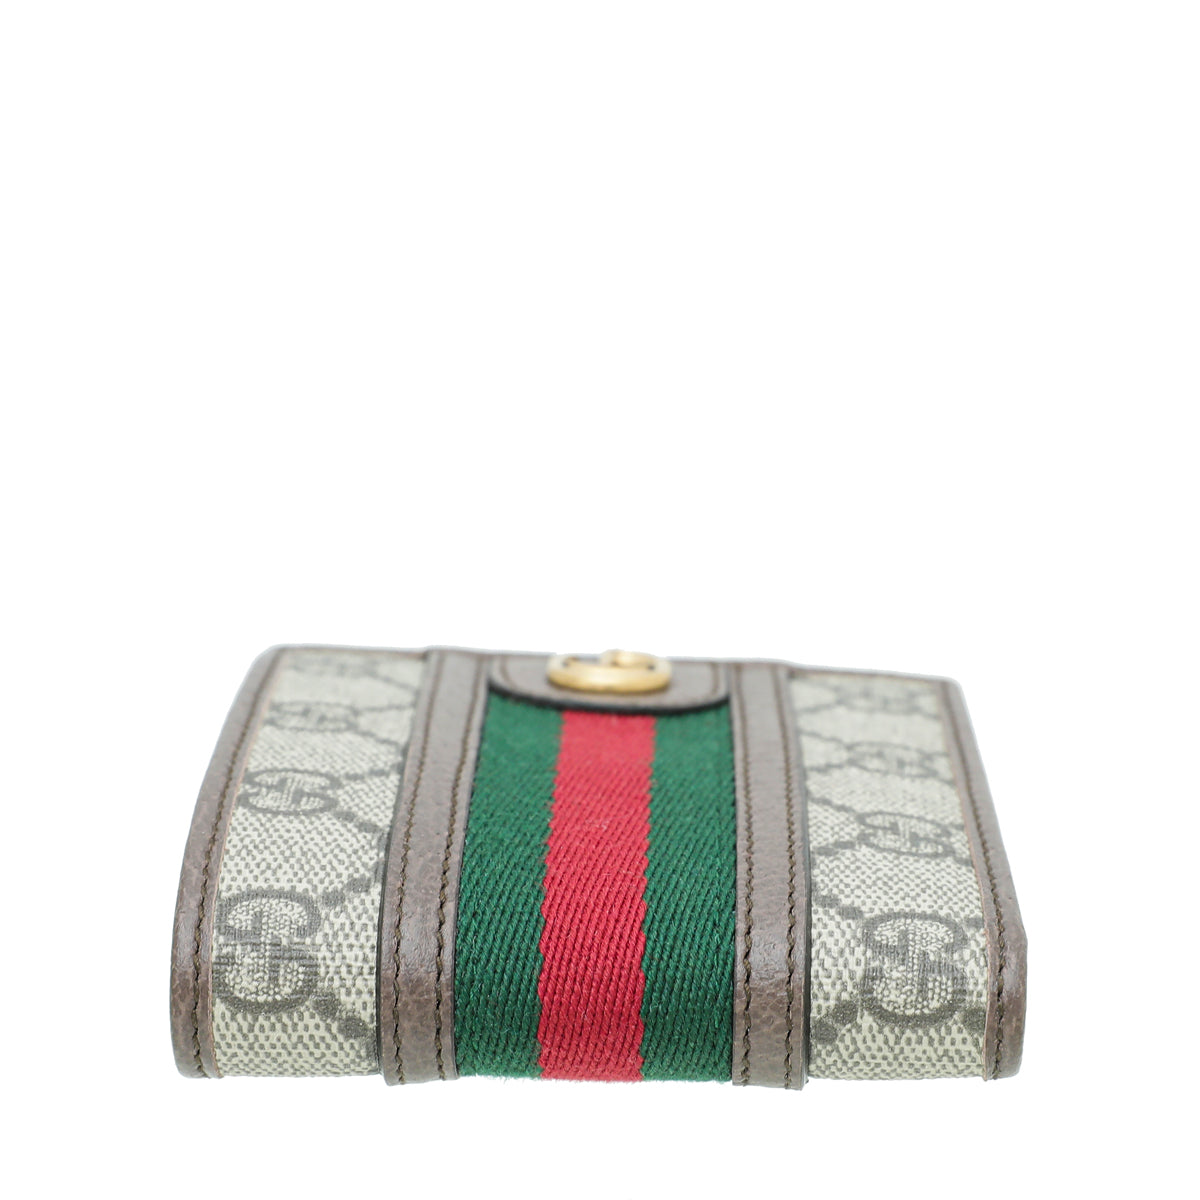 Gucci Ebony GG Ophidia Wallet